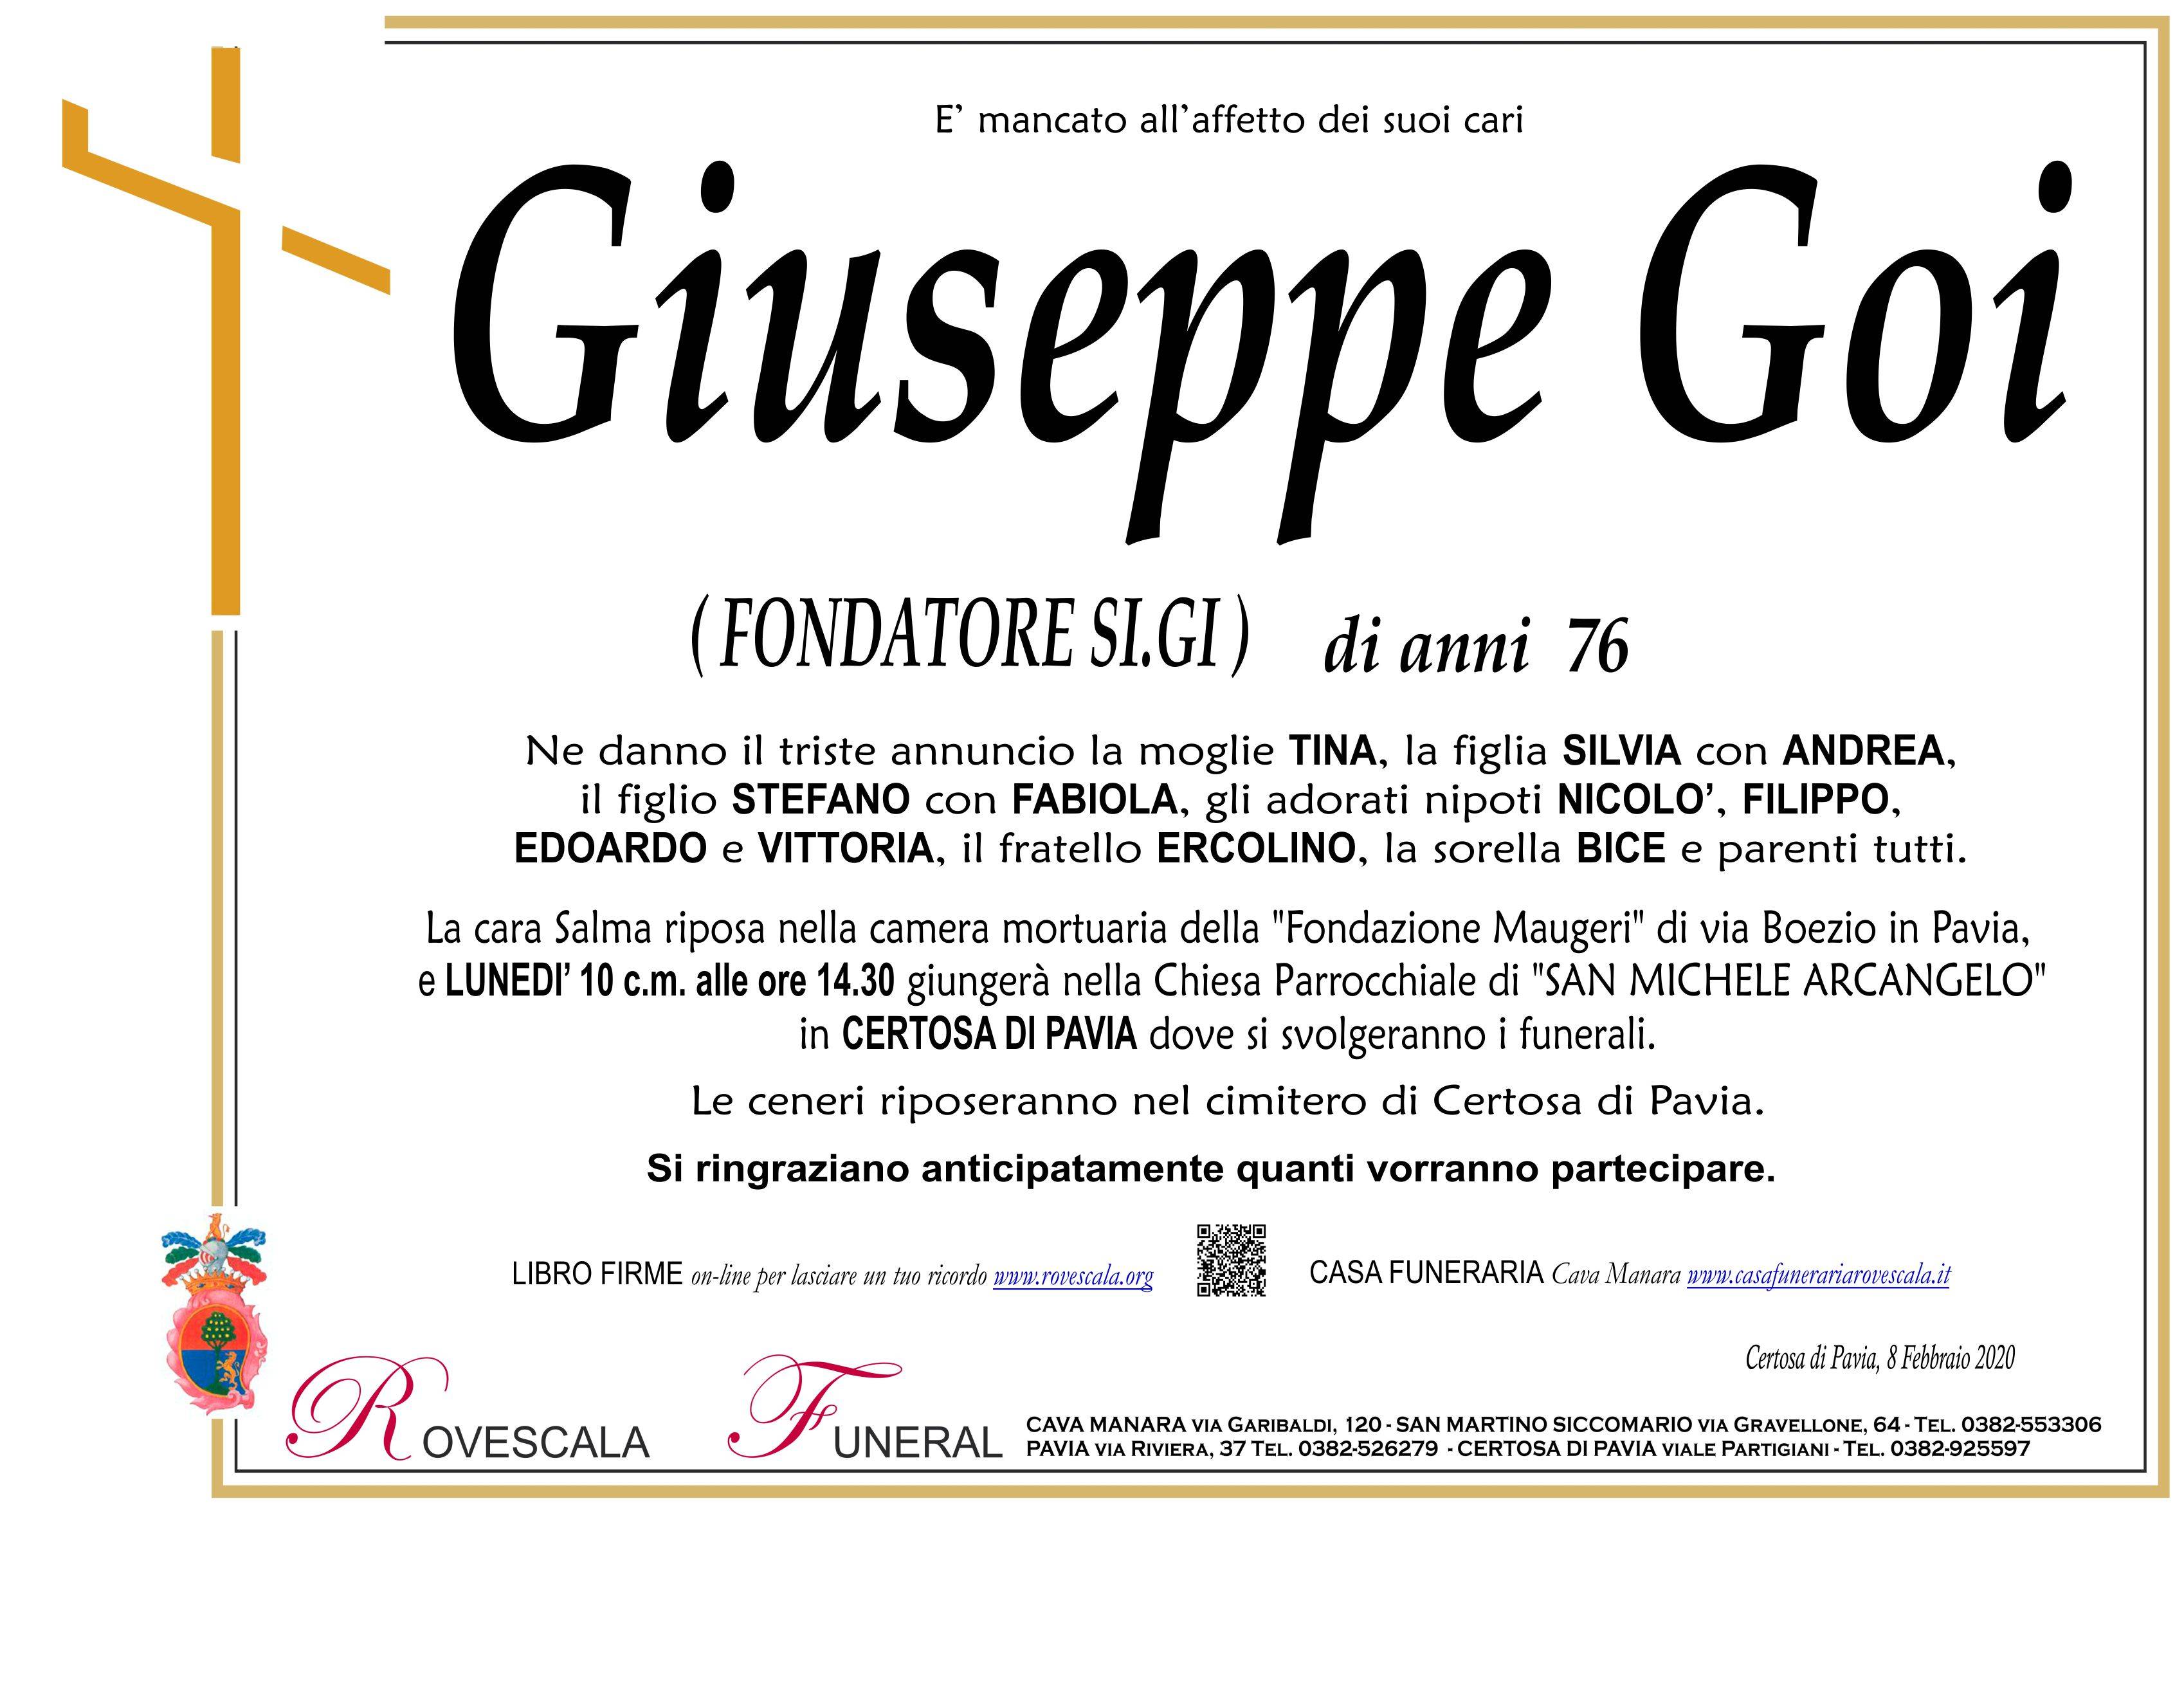 Giuseppe Goi